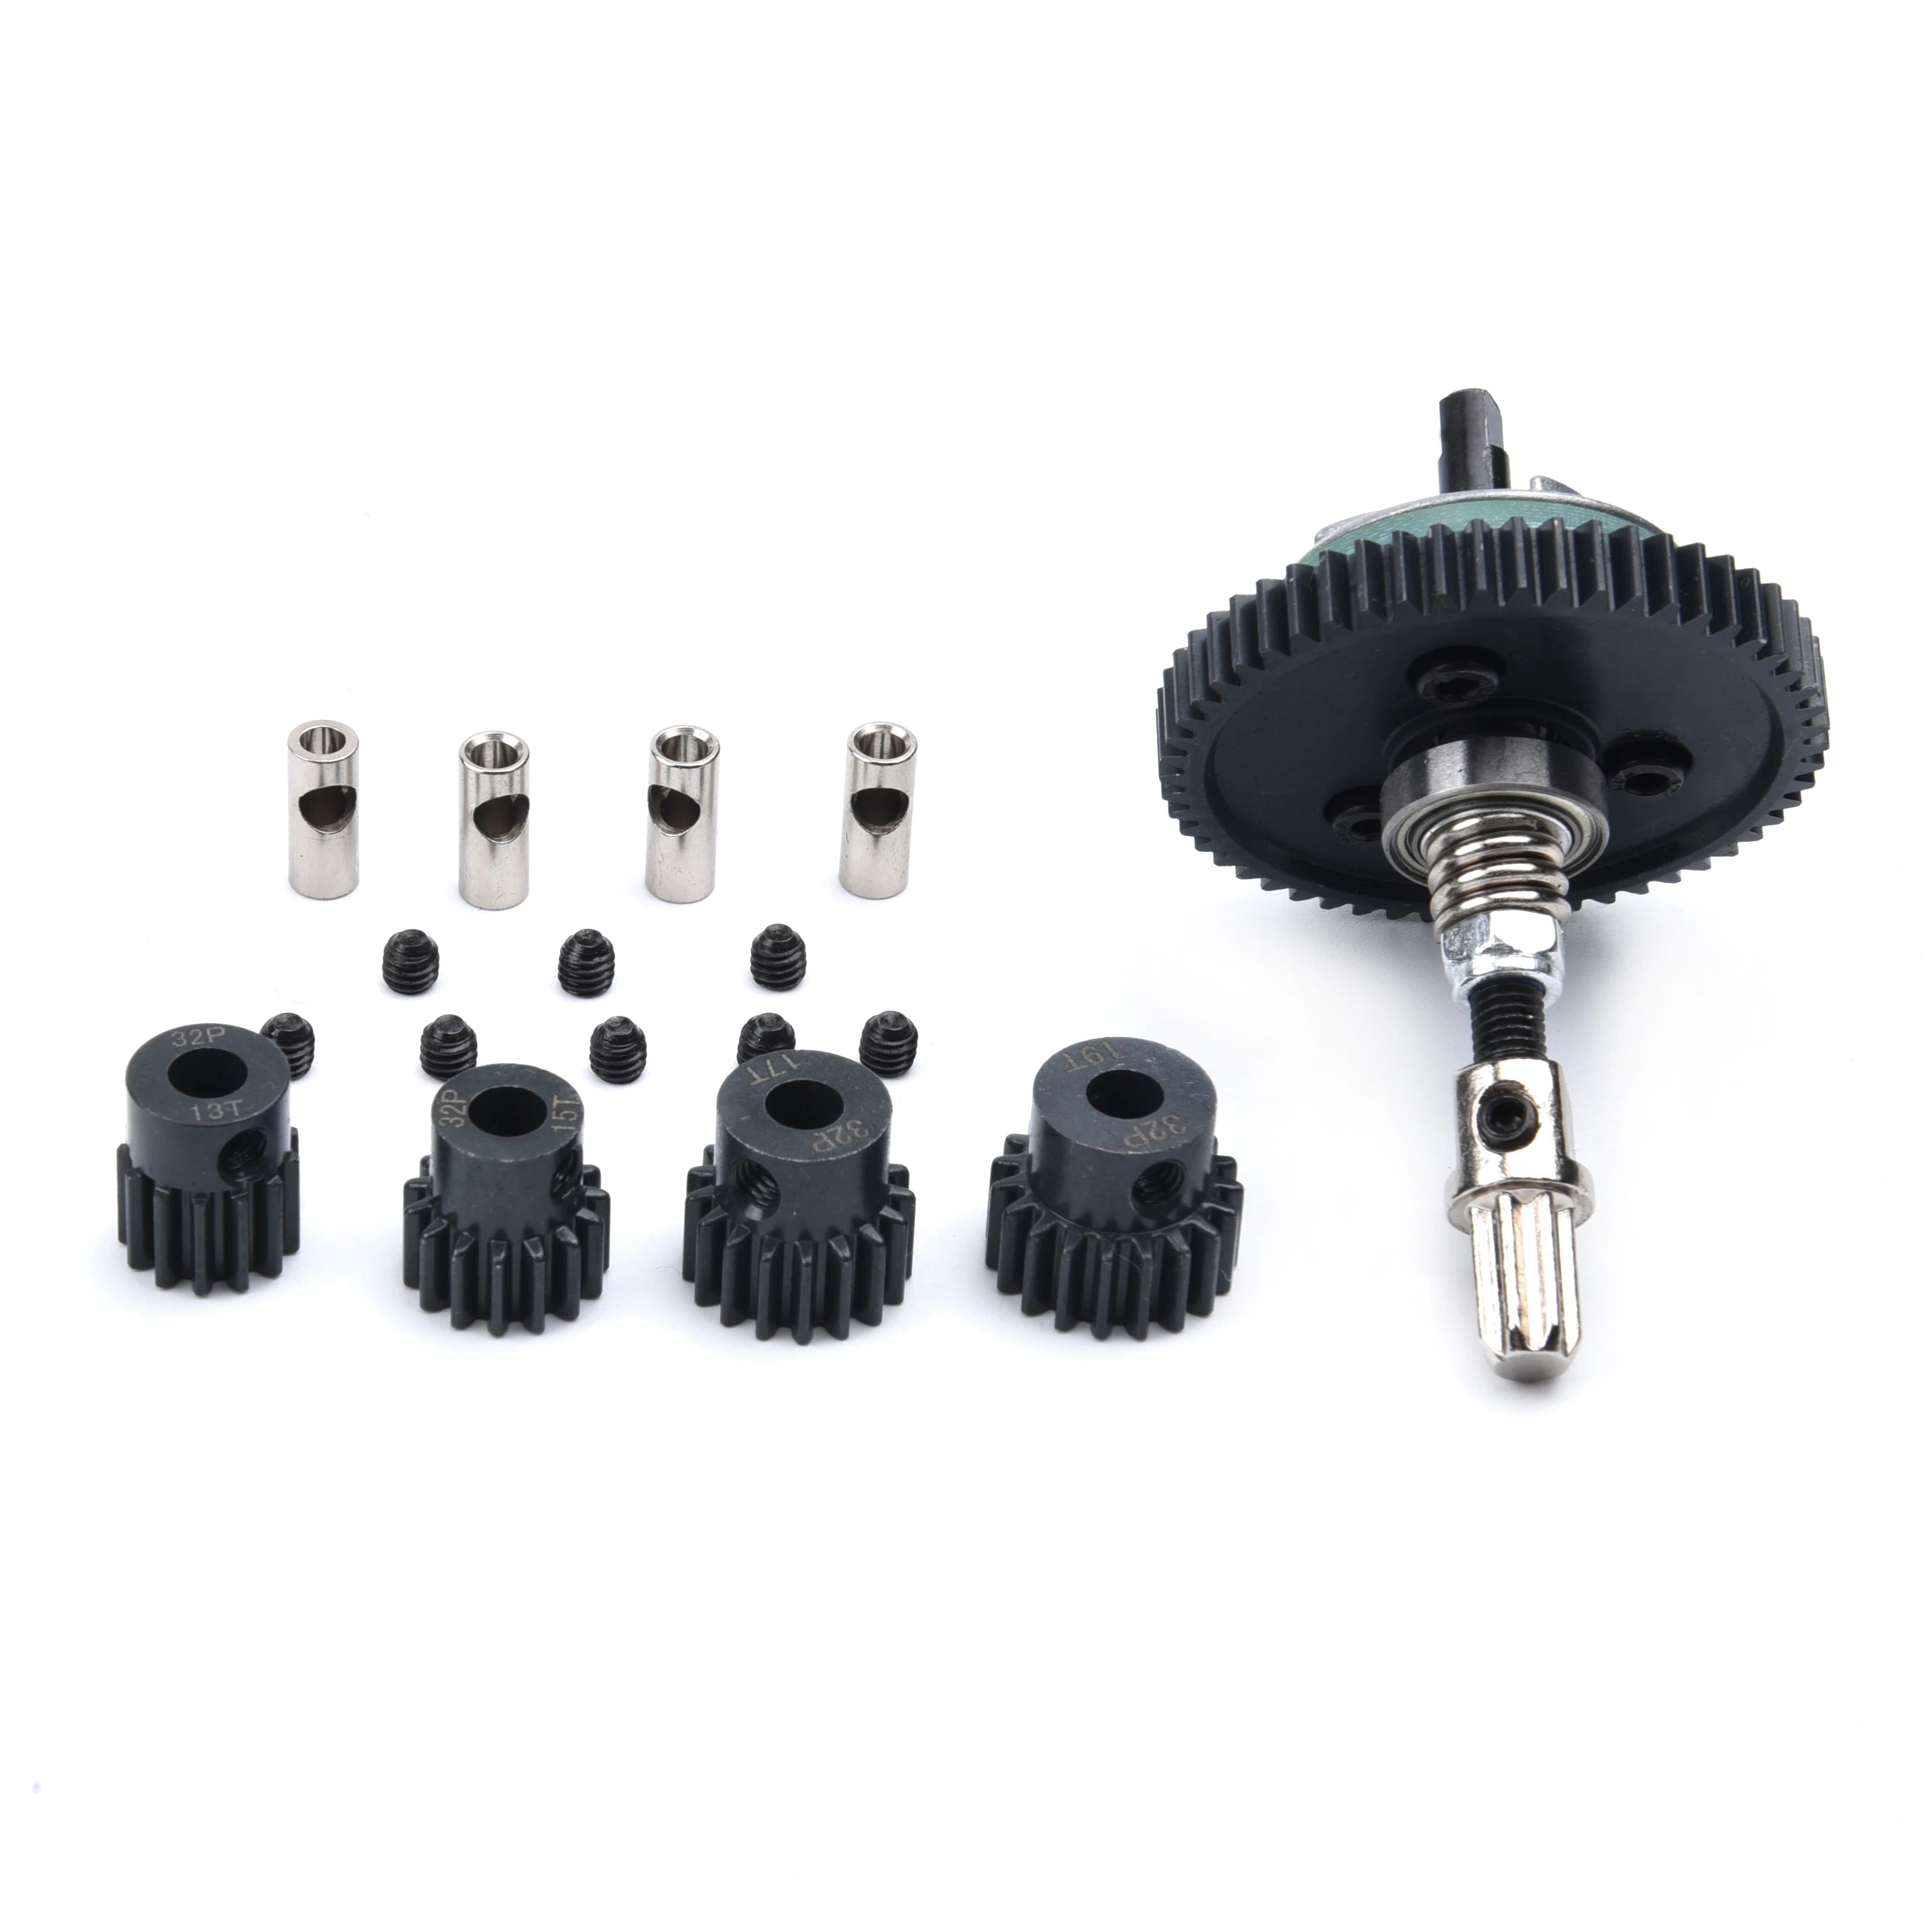 54T Spur Gear, RC Parts & Accs : Motor Components Quantity :